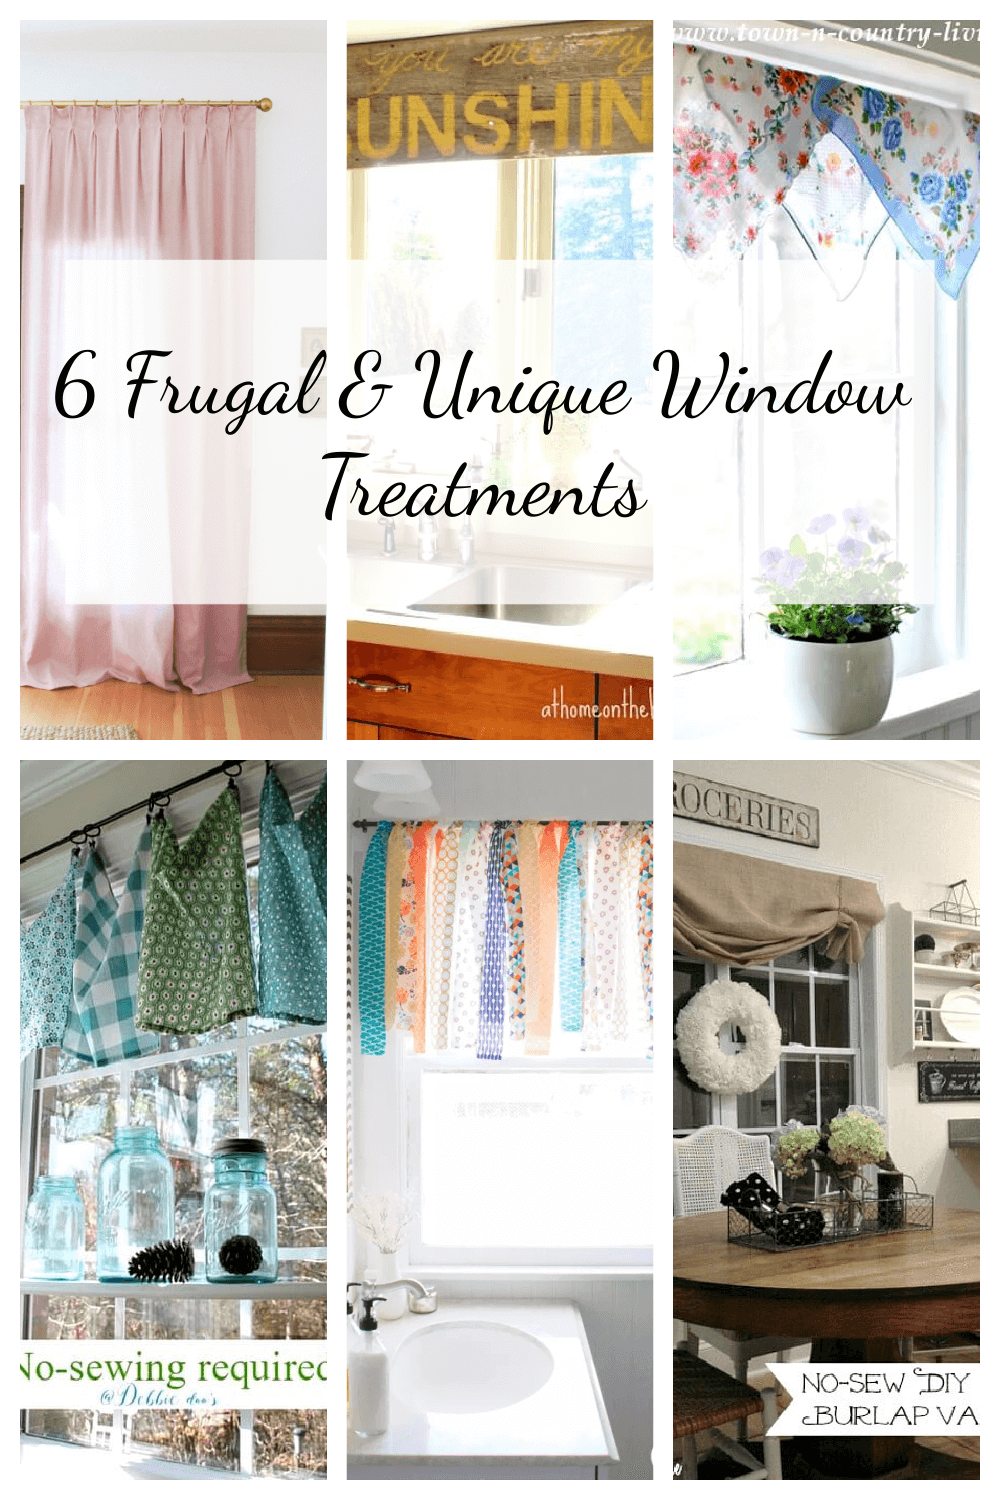 6 Frugal & Unique Window Treatments